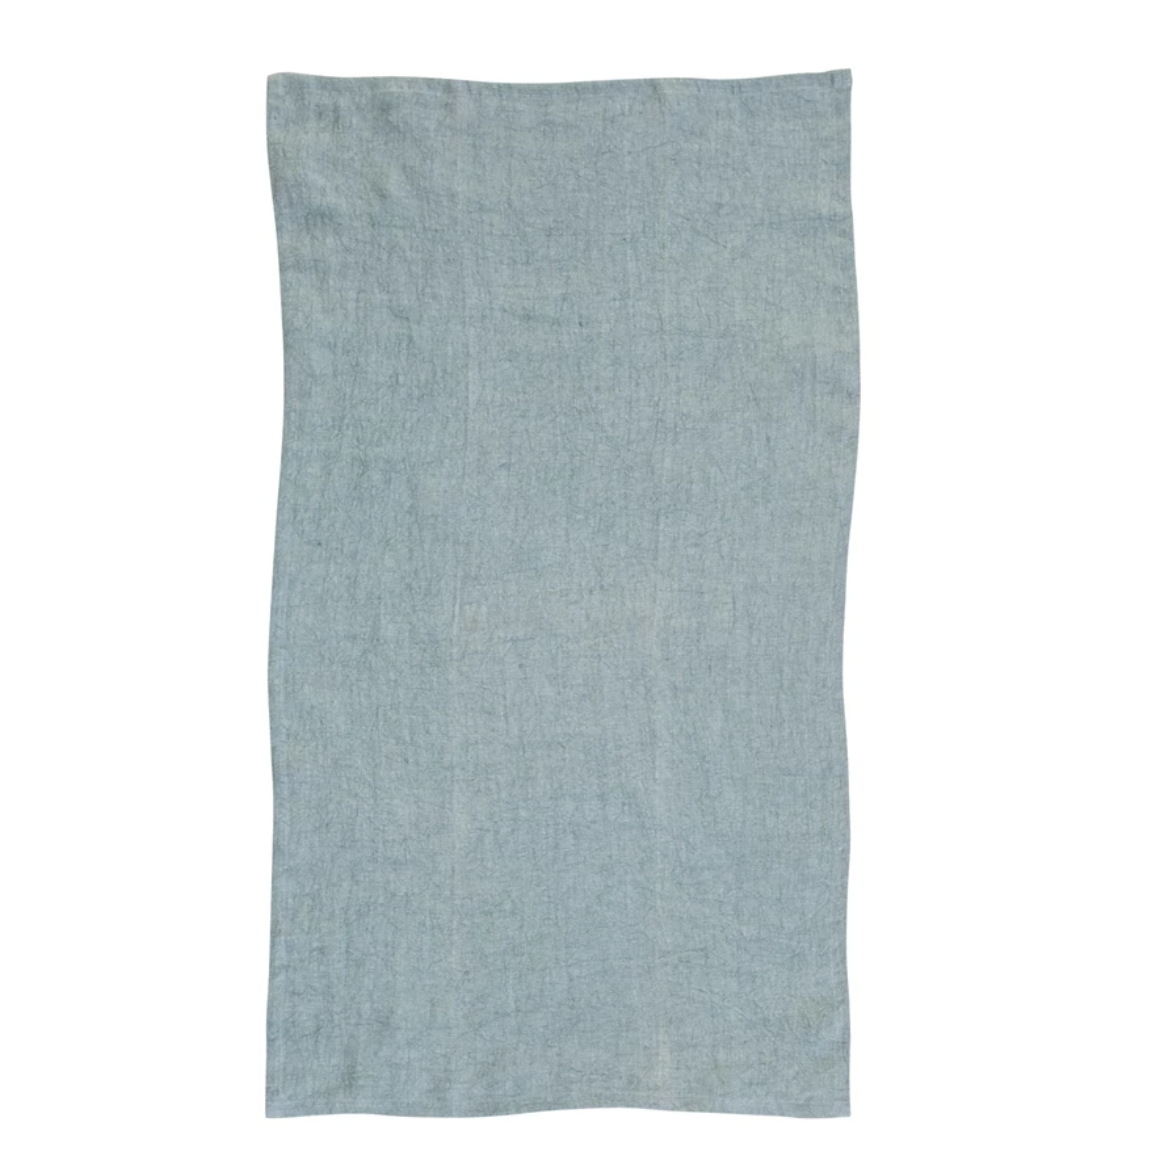 Mint Stonewashed Linen Tea Towel